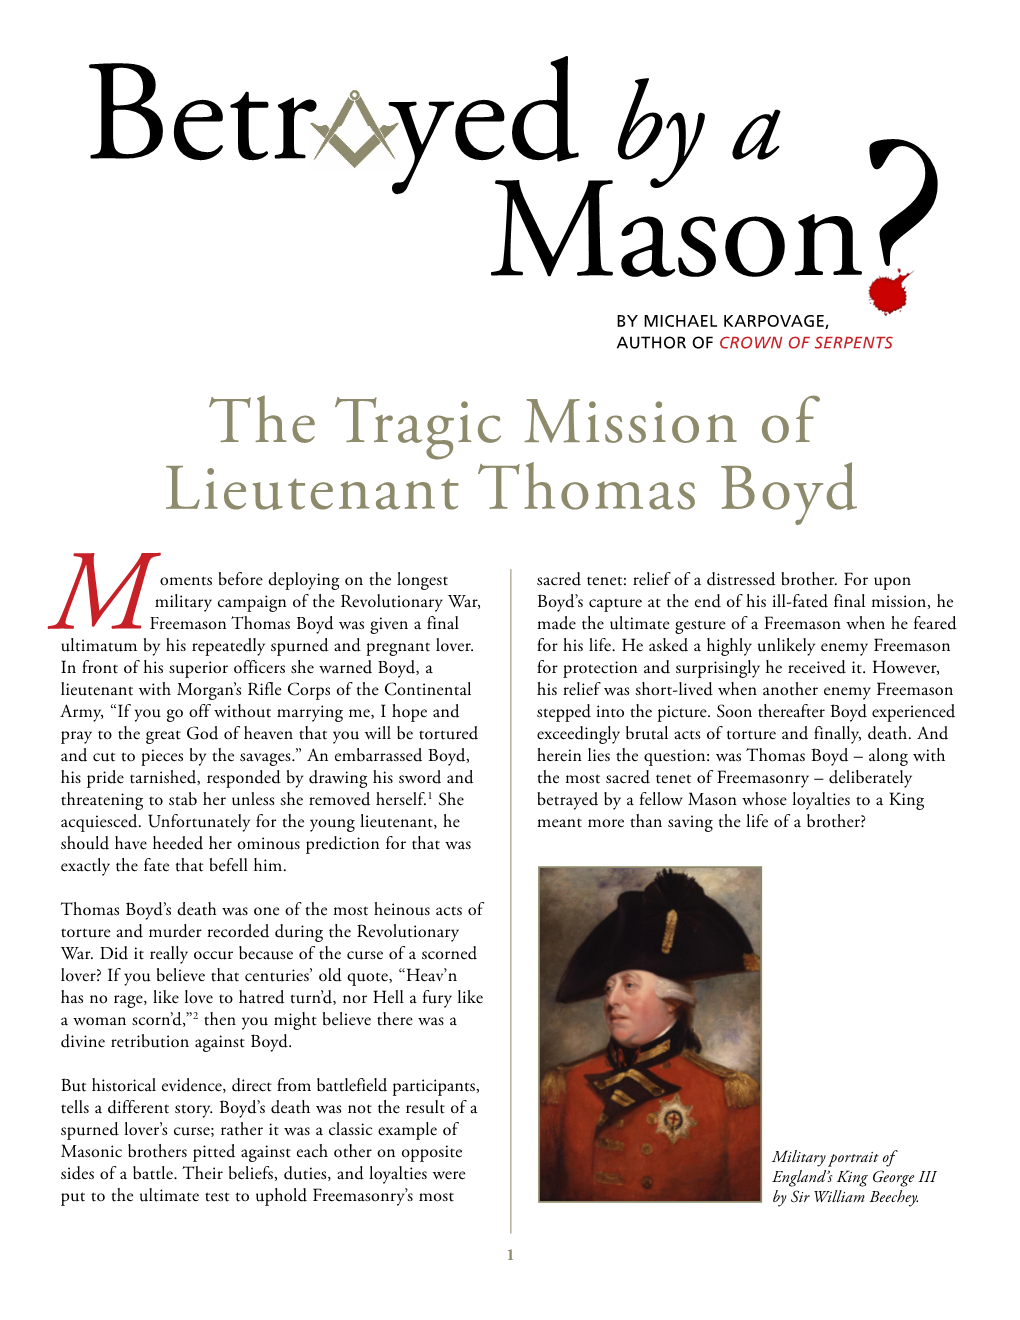 The Tragic Mission of Lieutenant Thomas Boyd